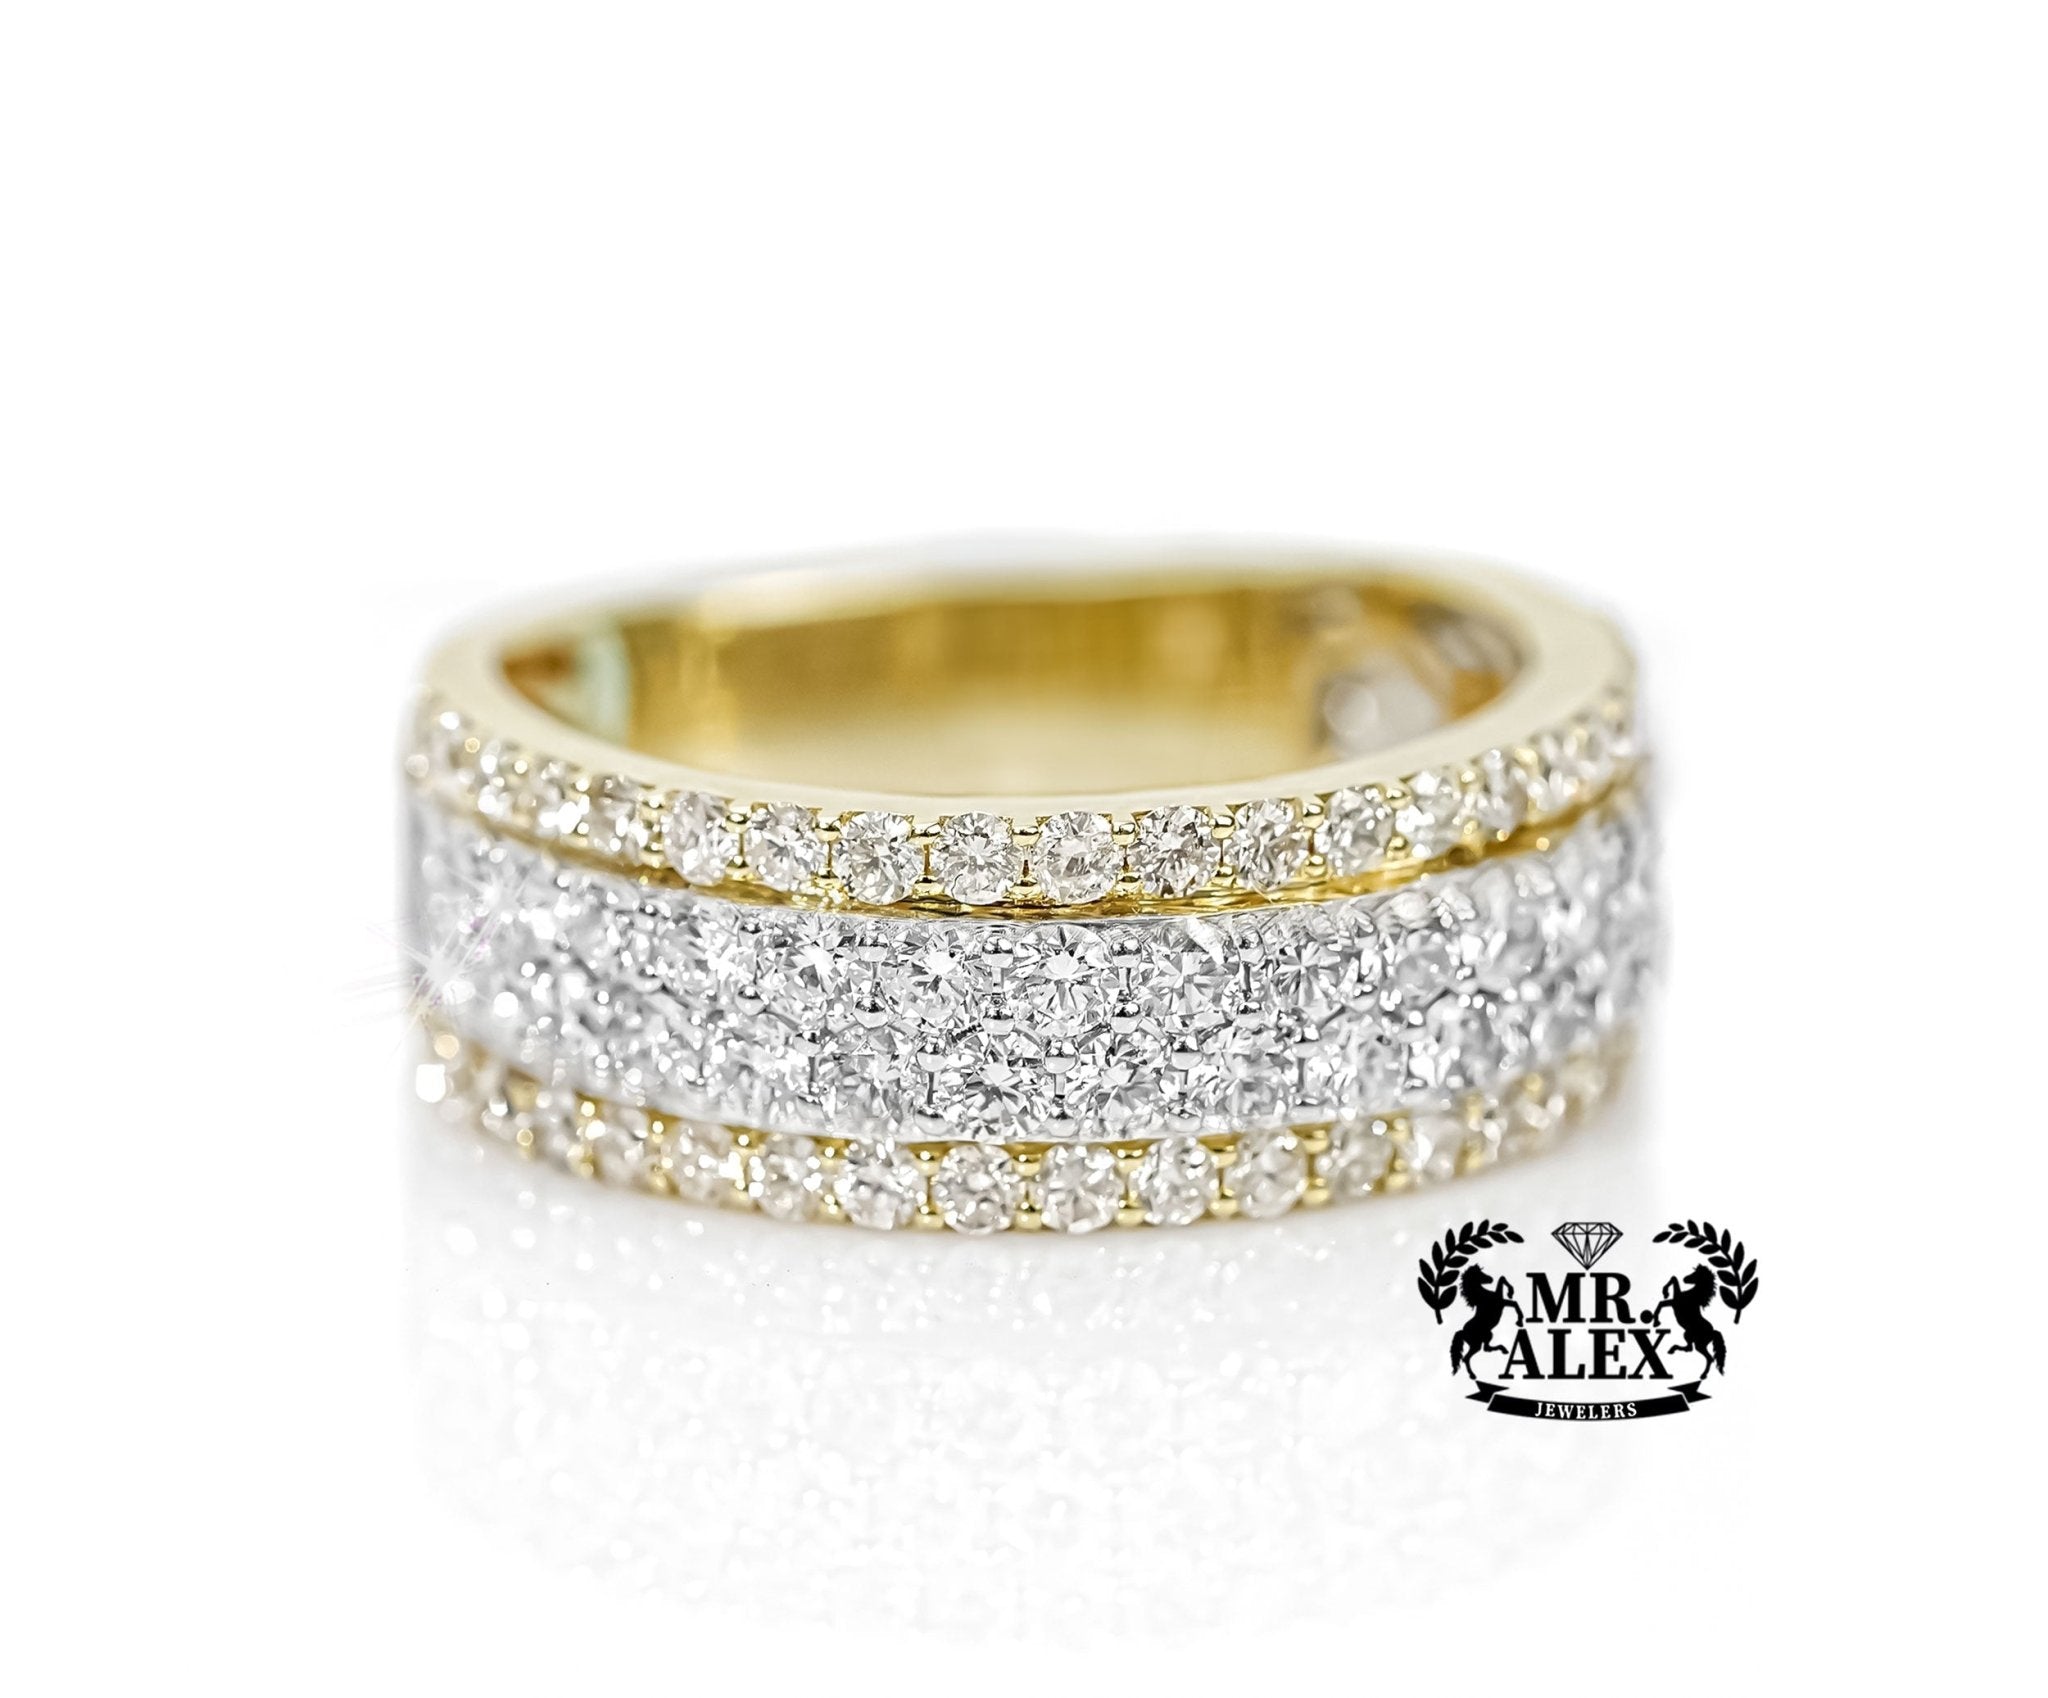 10k Gold Four-Row Graduated Diamond Ring 2.30ct - Mr. Alex Jewelry